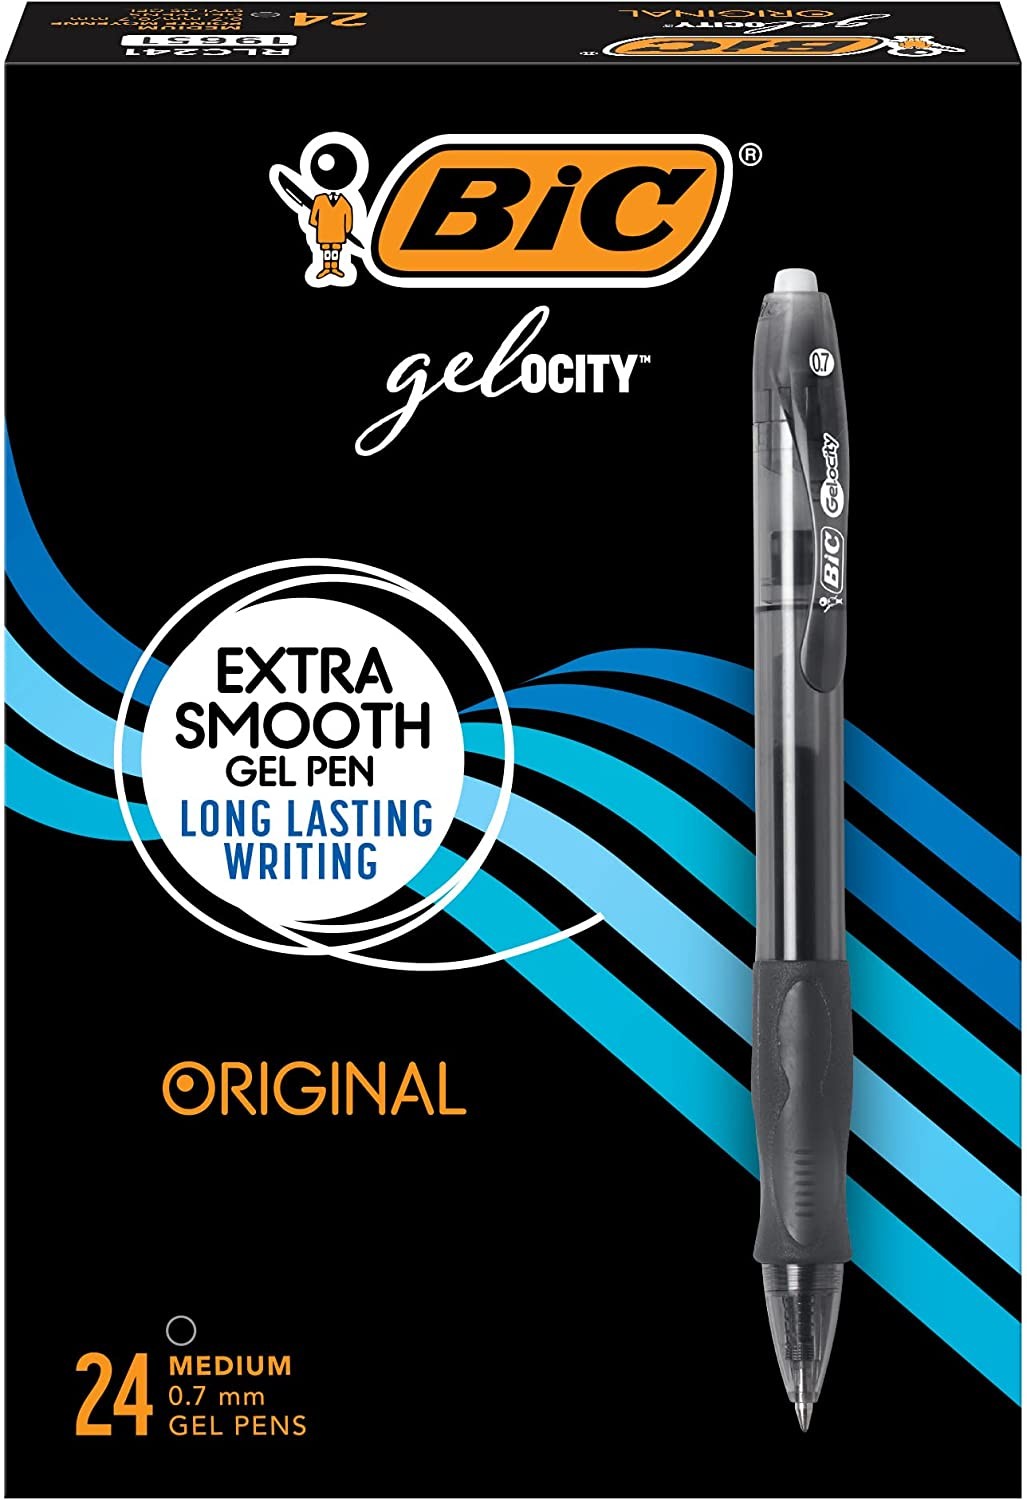 BIC Gel-ocity Original Black Gel Pens, Medium Point (0.7mm), 24-Count ...